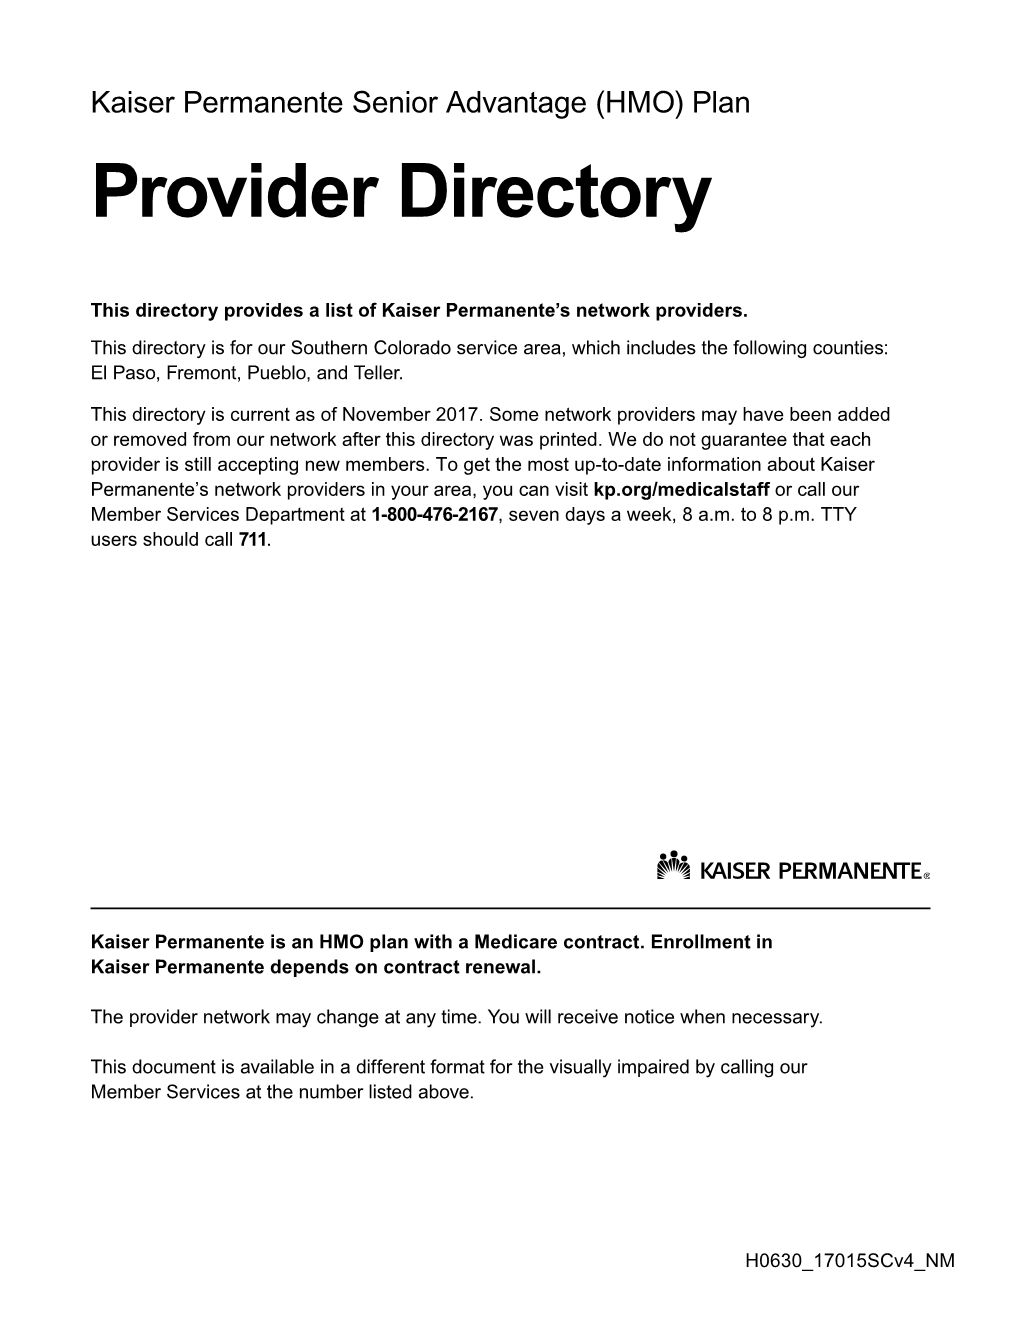 2017 Kaiser Permanente Southern Colorado Provider Directory